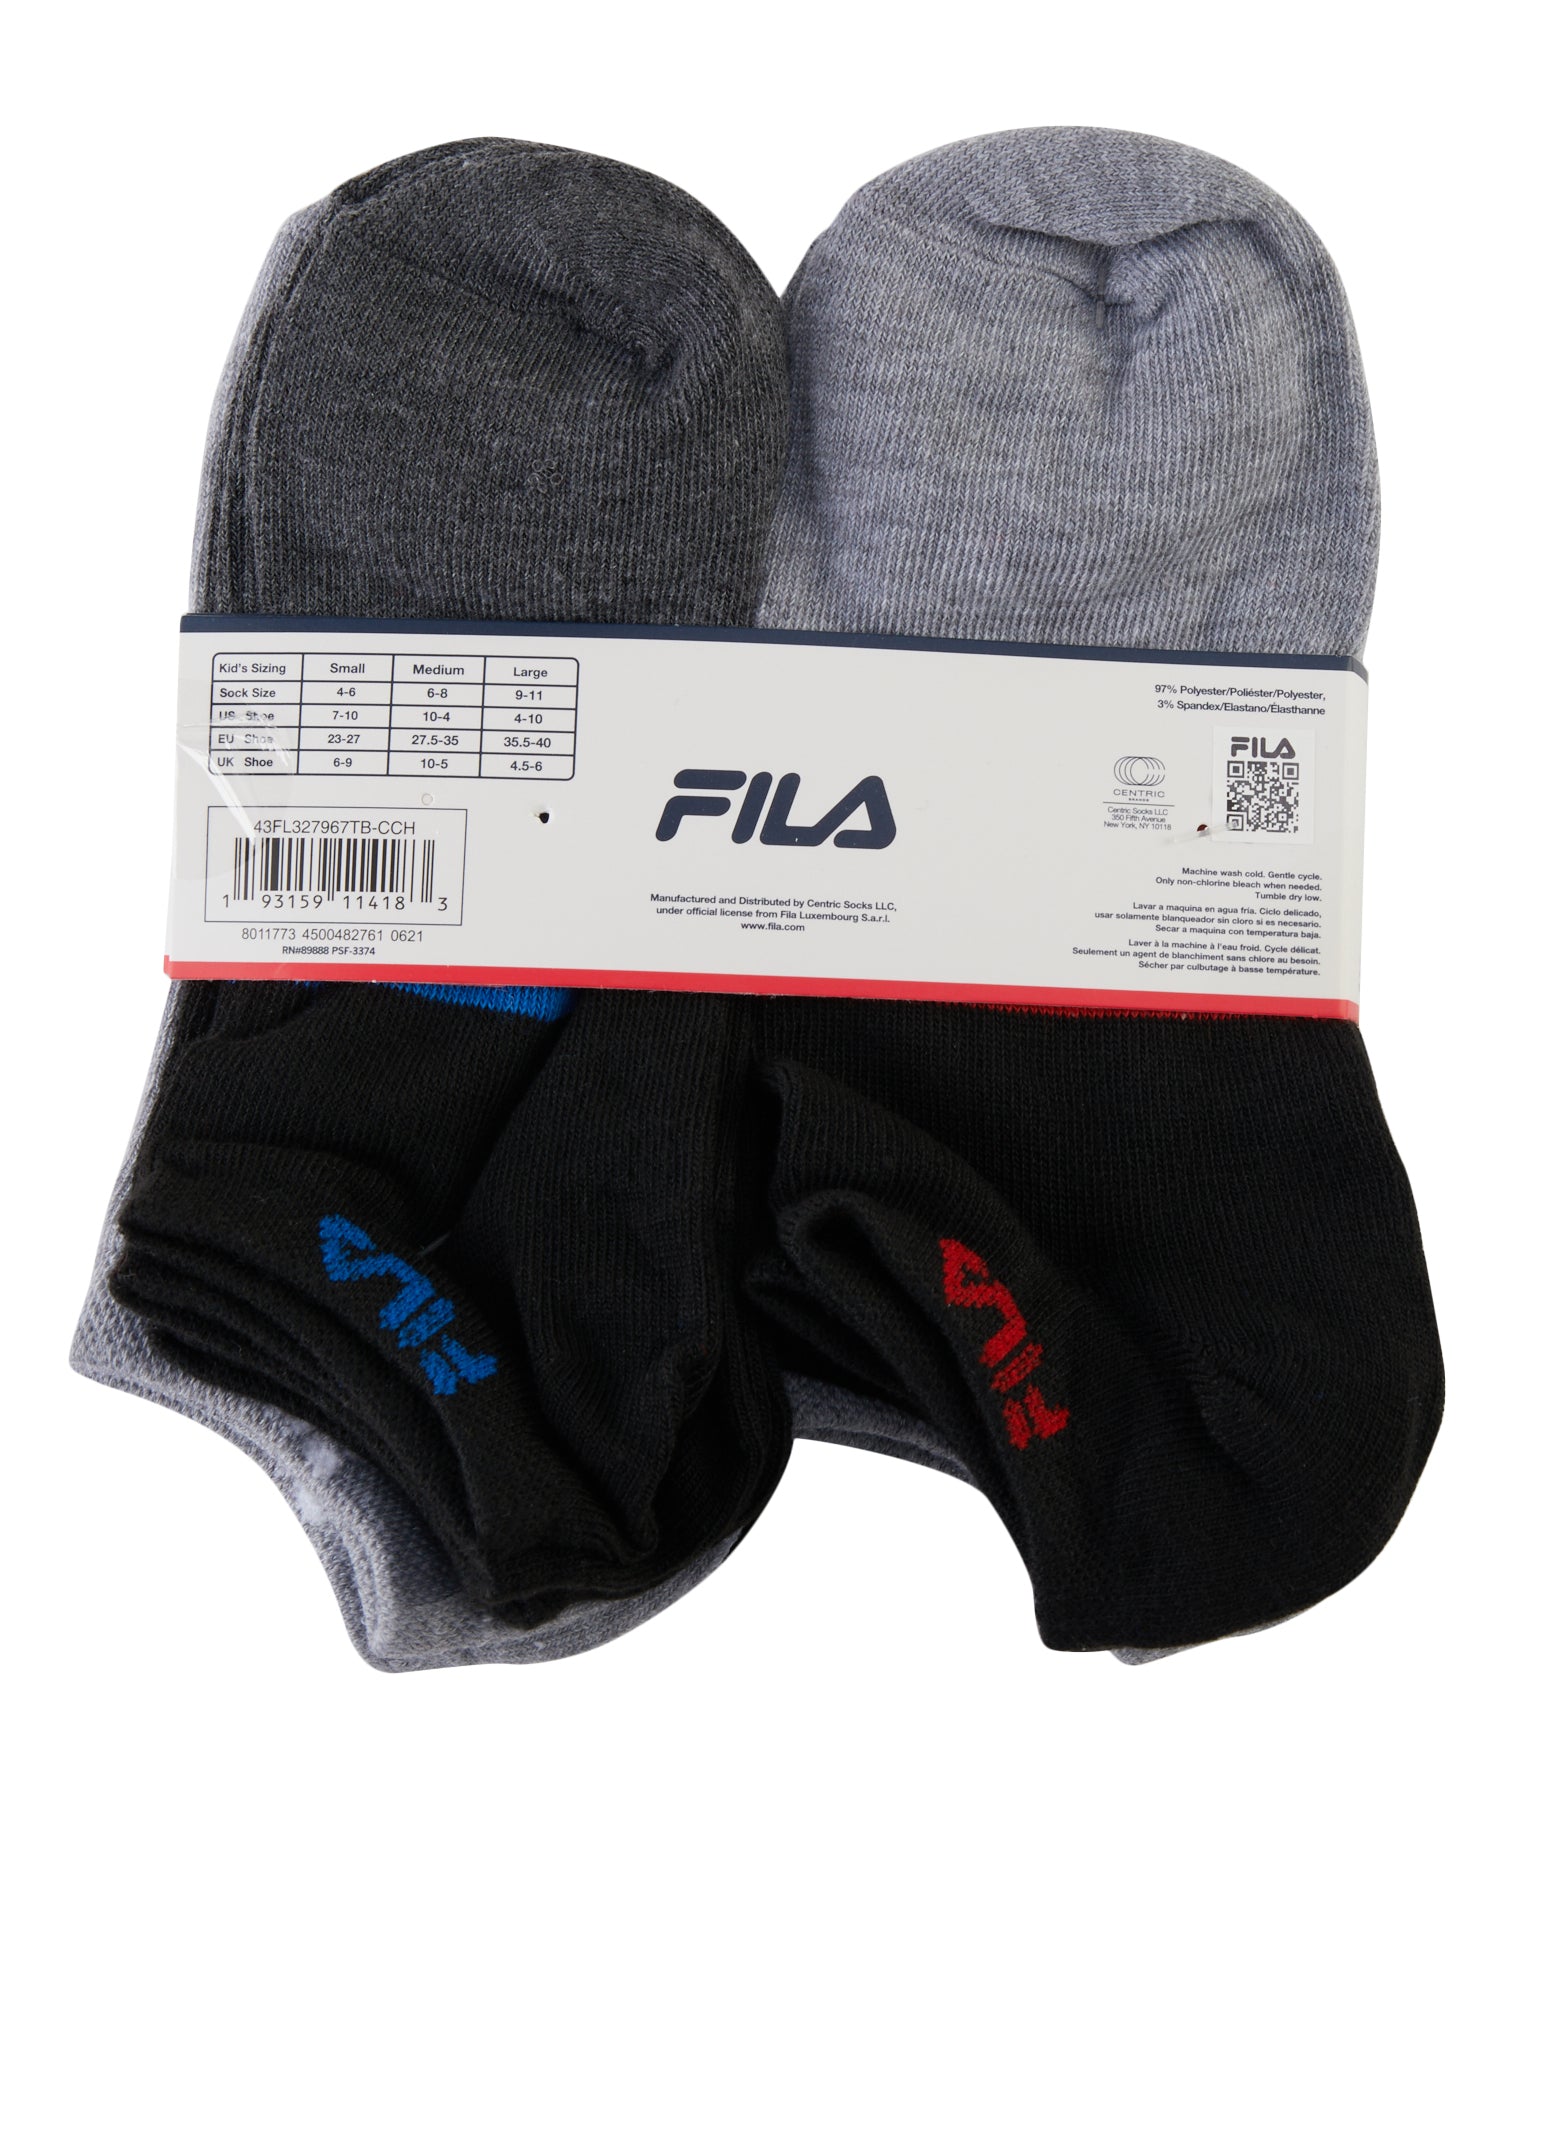 Boys Fila No Show Socks 10 Pack Size 10-4